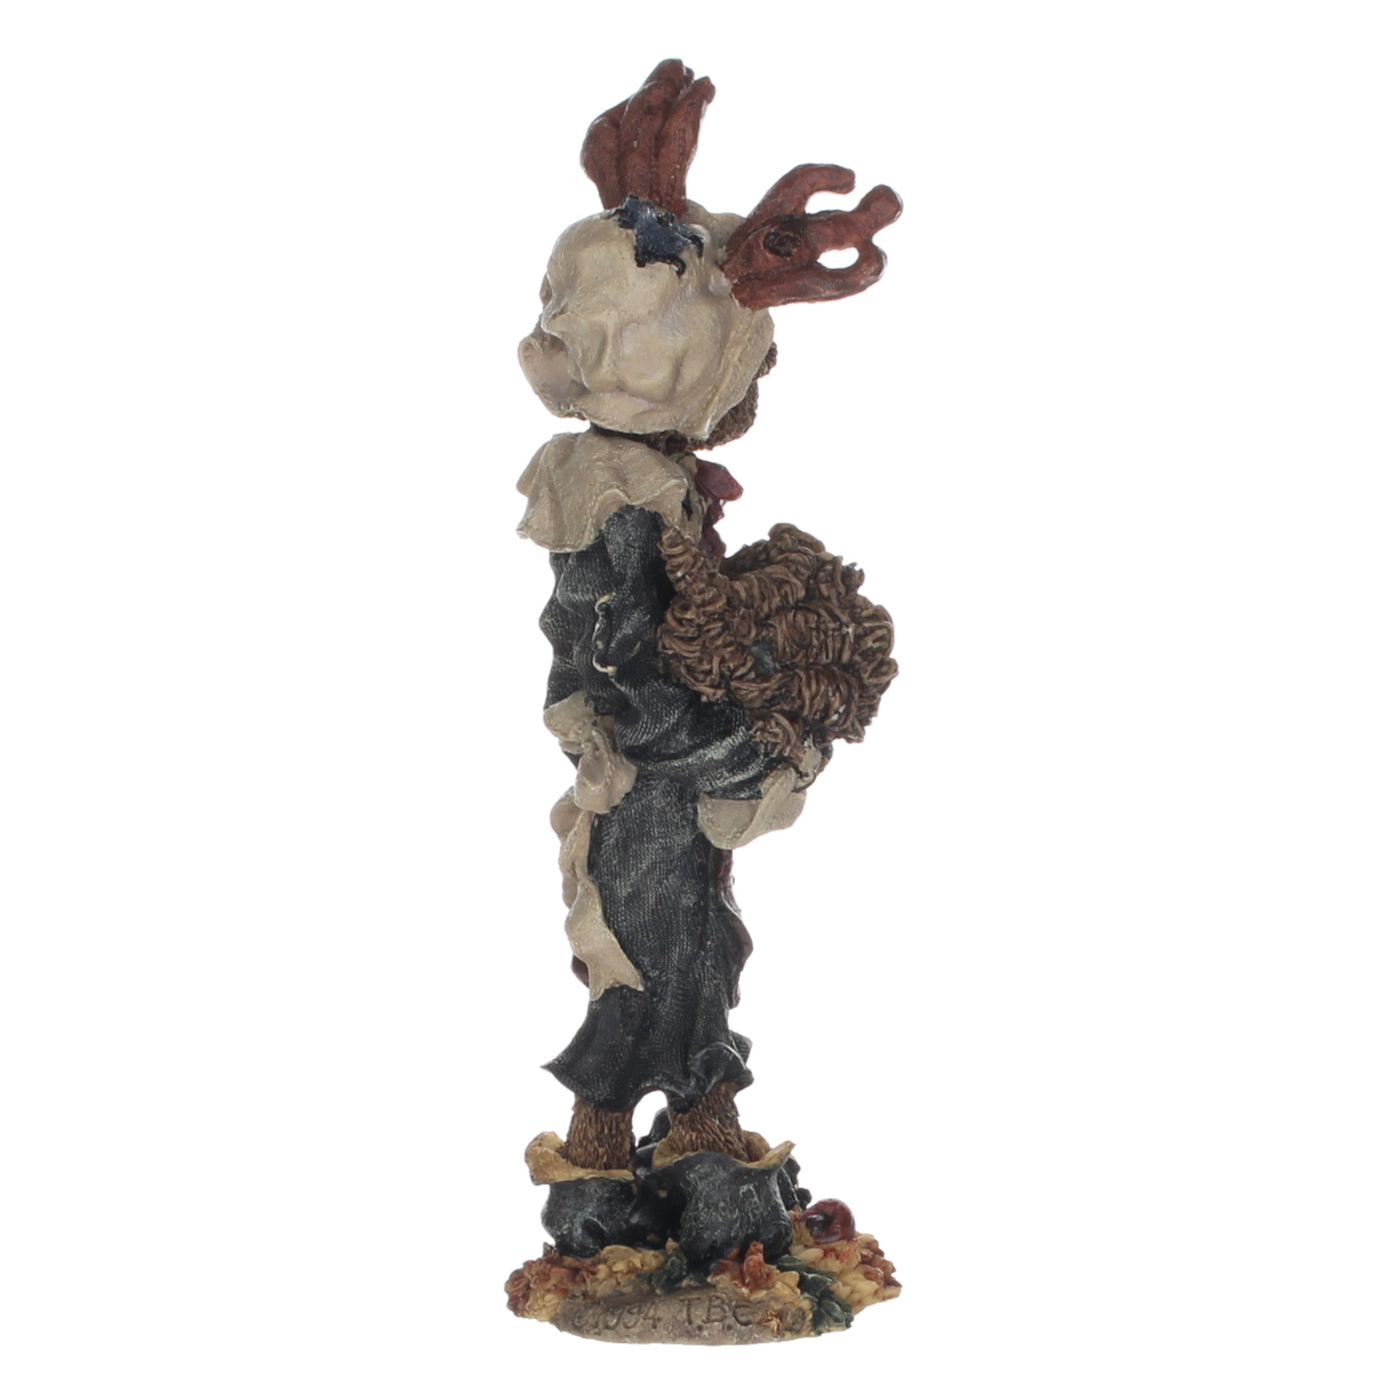 Boyds Bears Resin Figurine in Box Christmas 2834 1995 7.5"